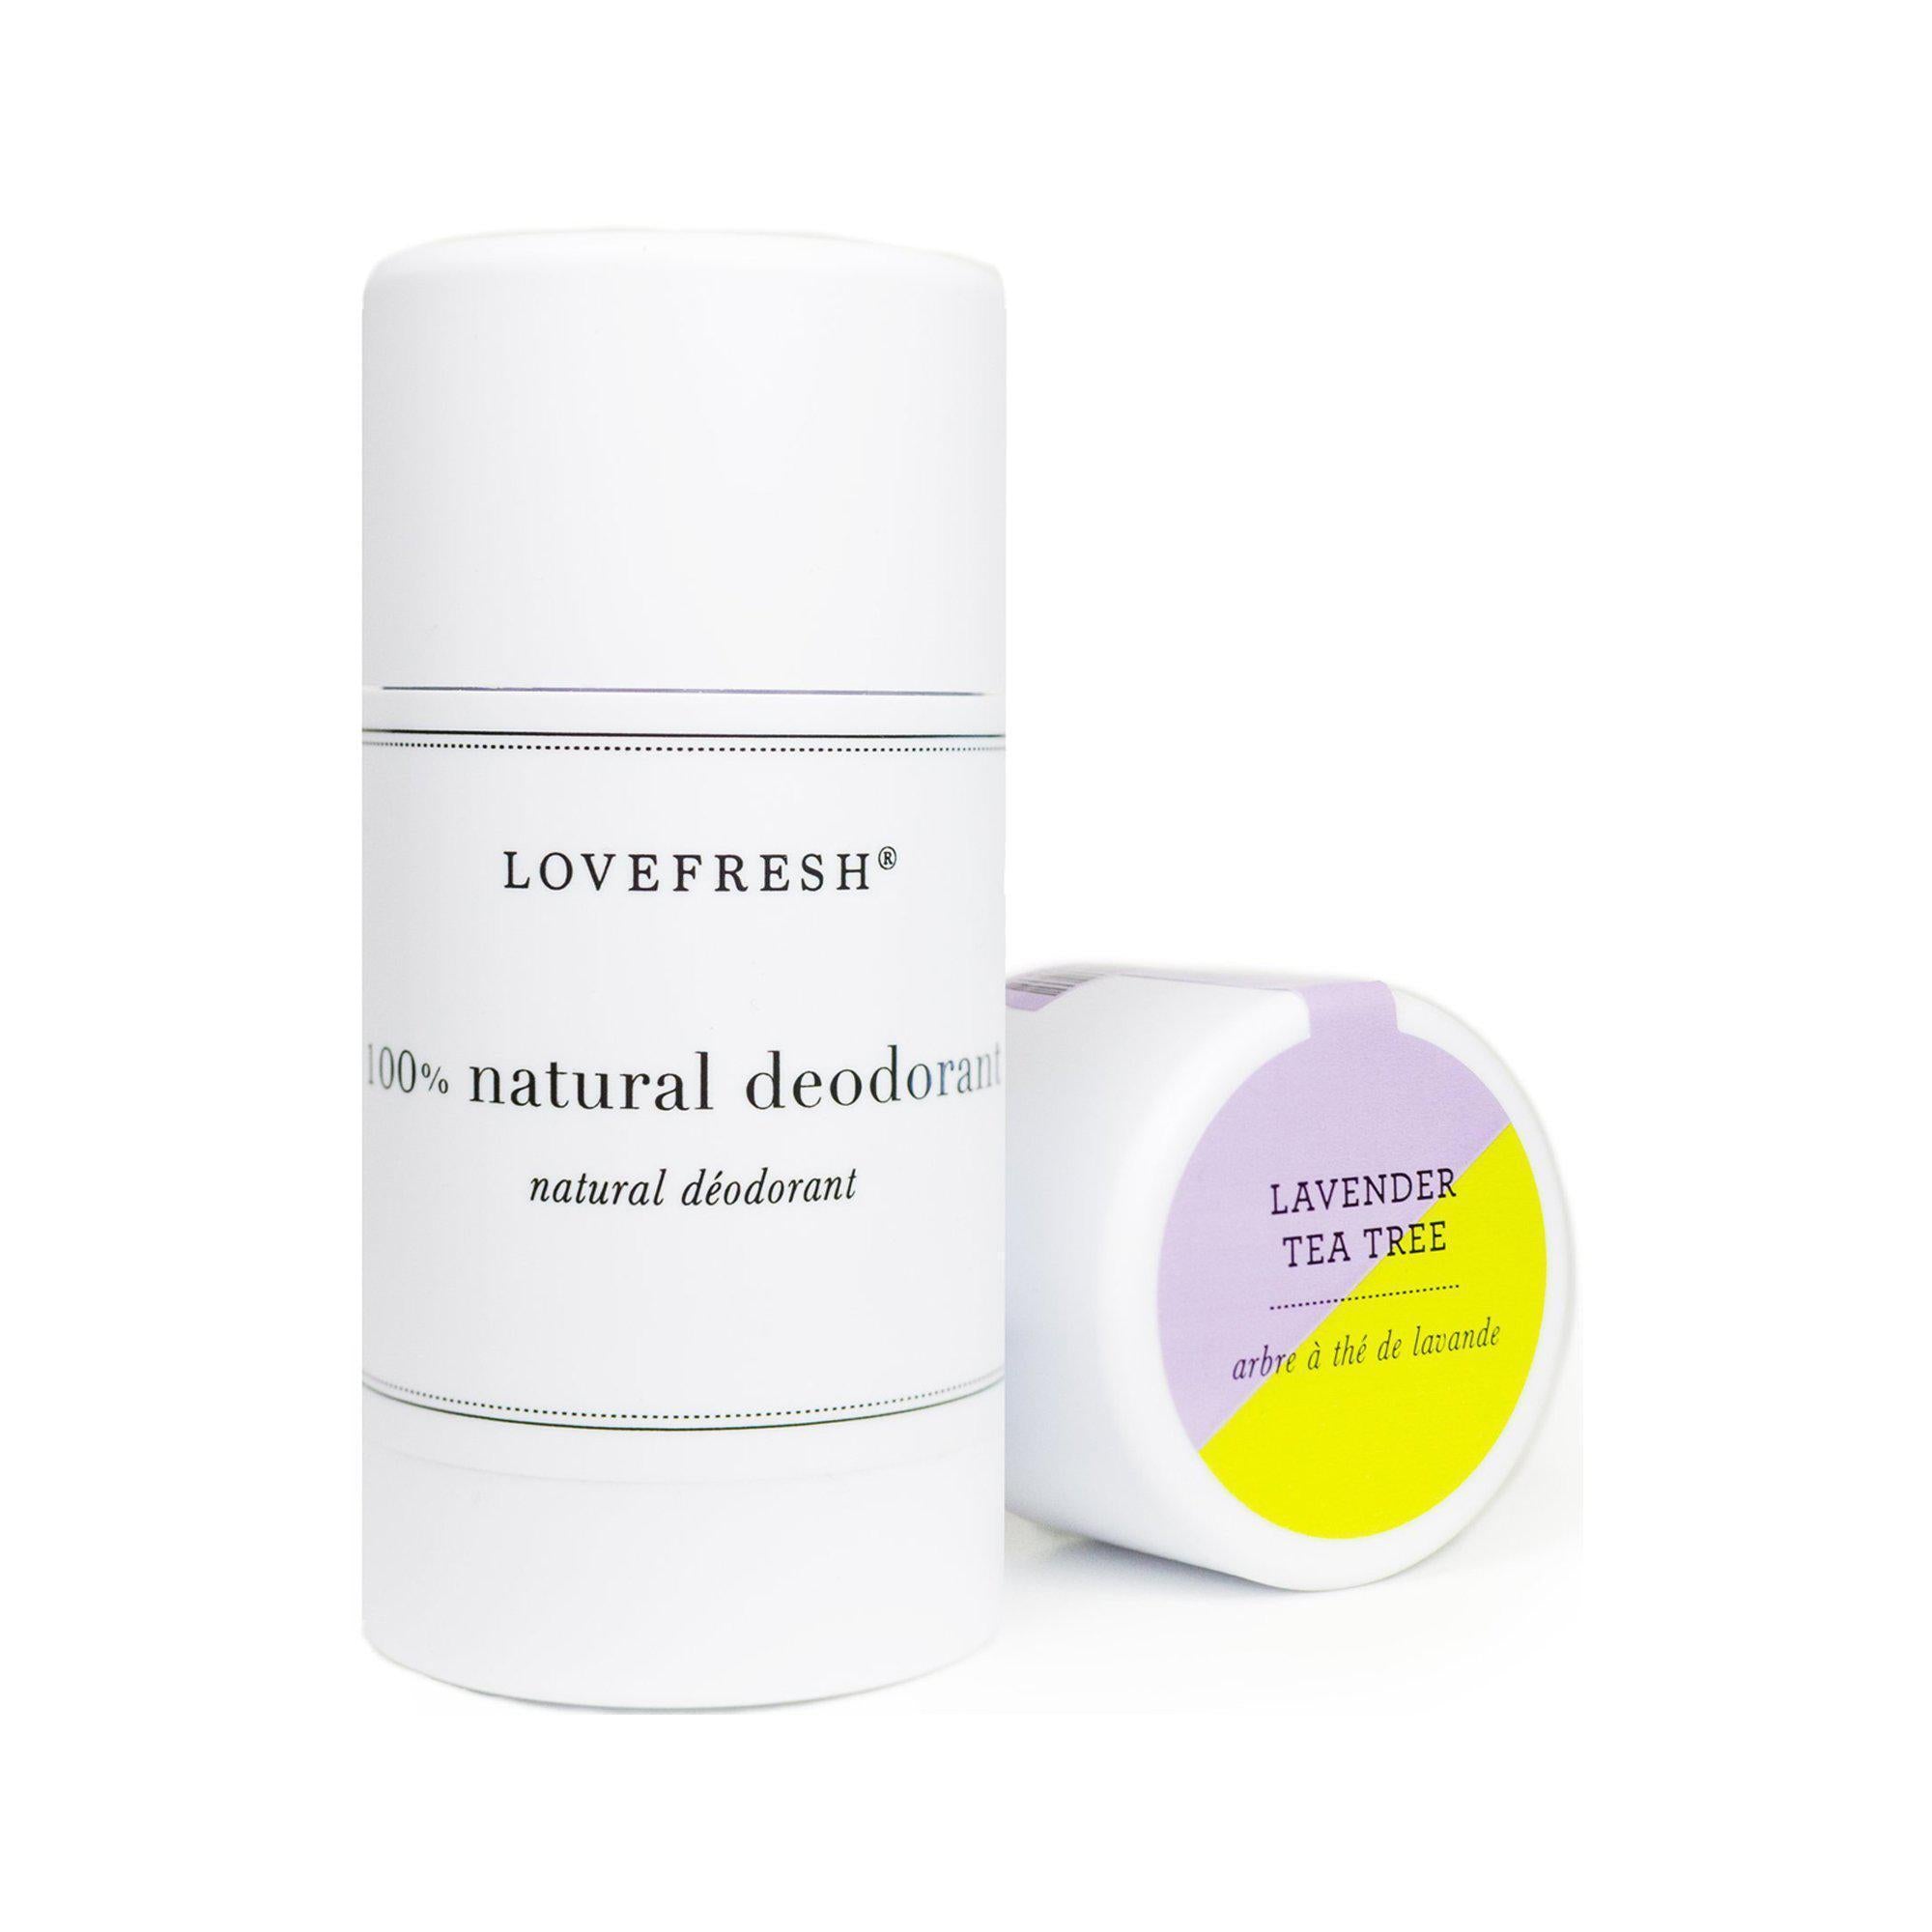 Déodorant Lavande Lavendel Deo - Lovefresh